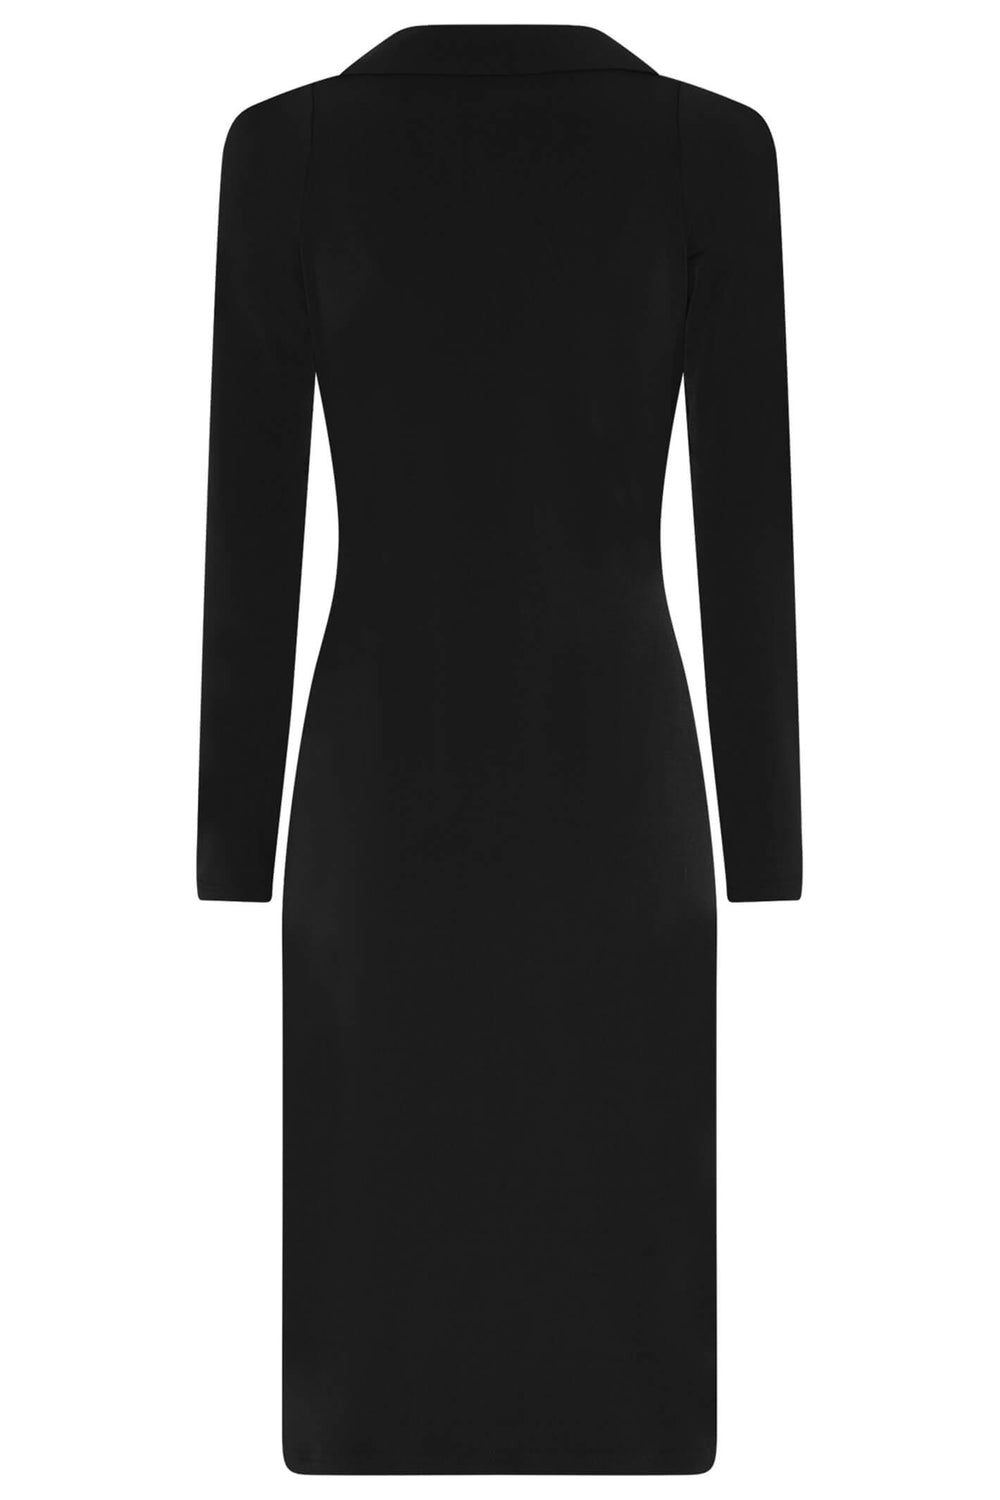 Tia 78672-7093 9000 Black V-Neck Long Sleeve Dress - Dotique